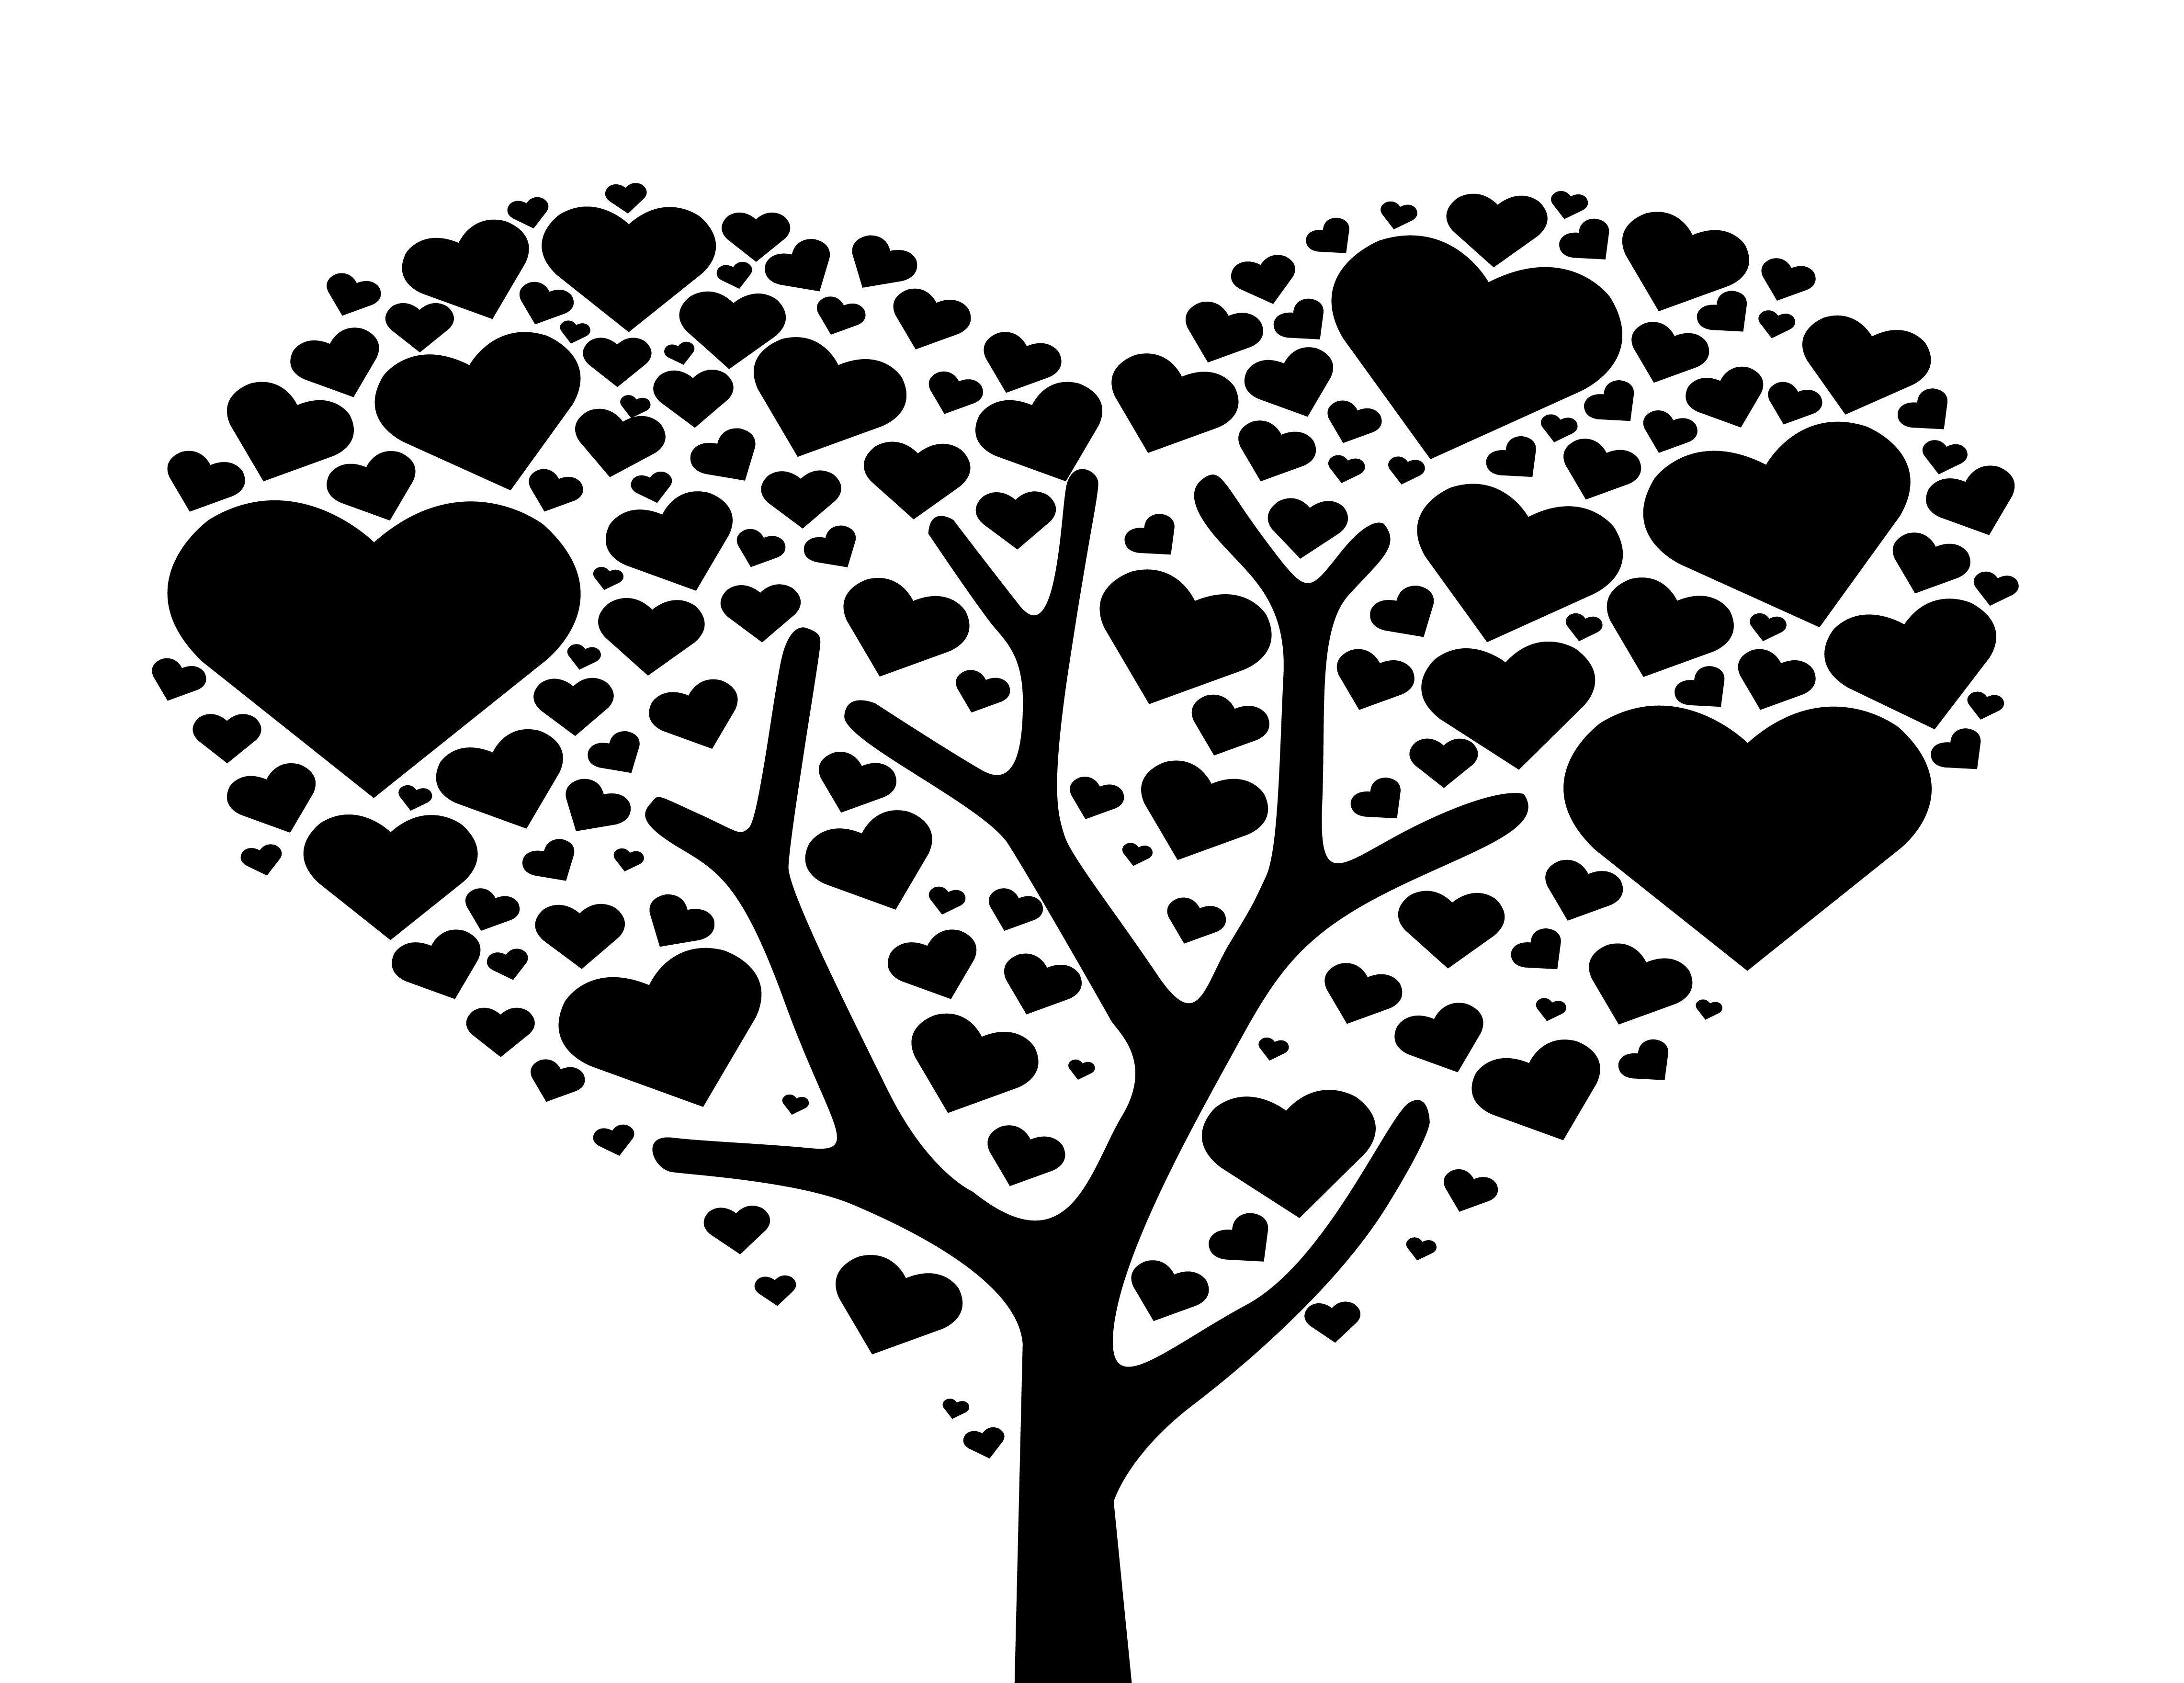 Tree of heart , love tree symbol vector